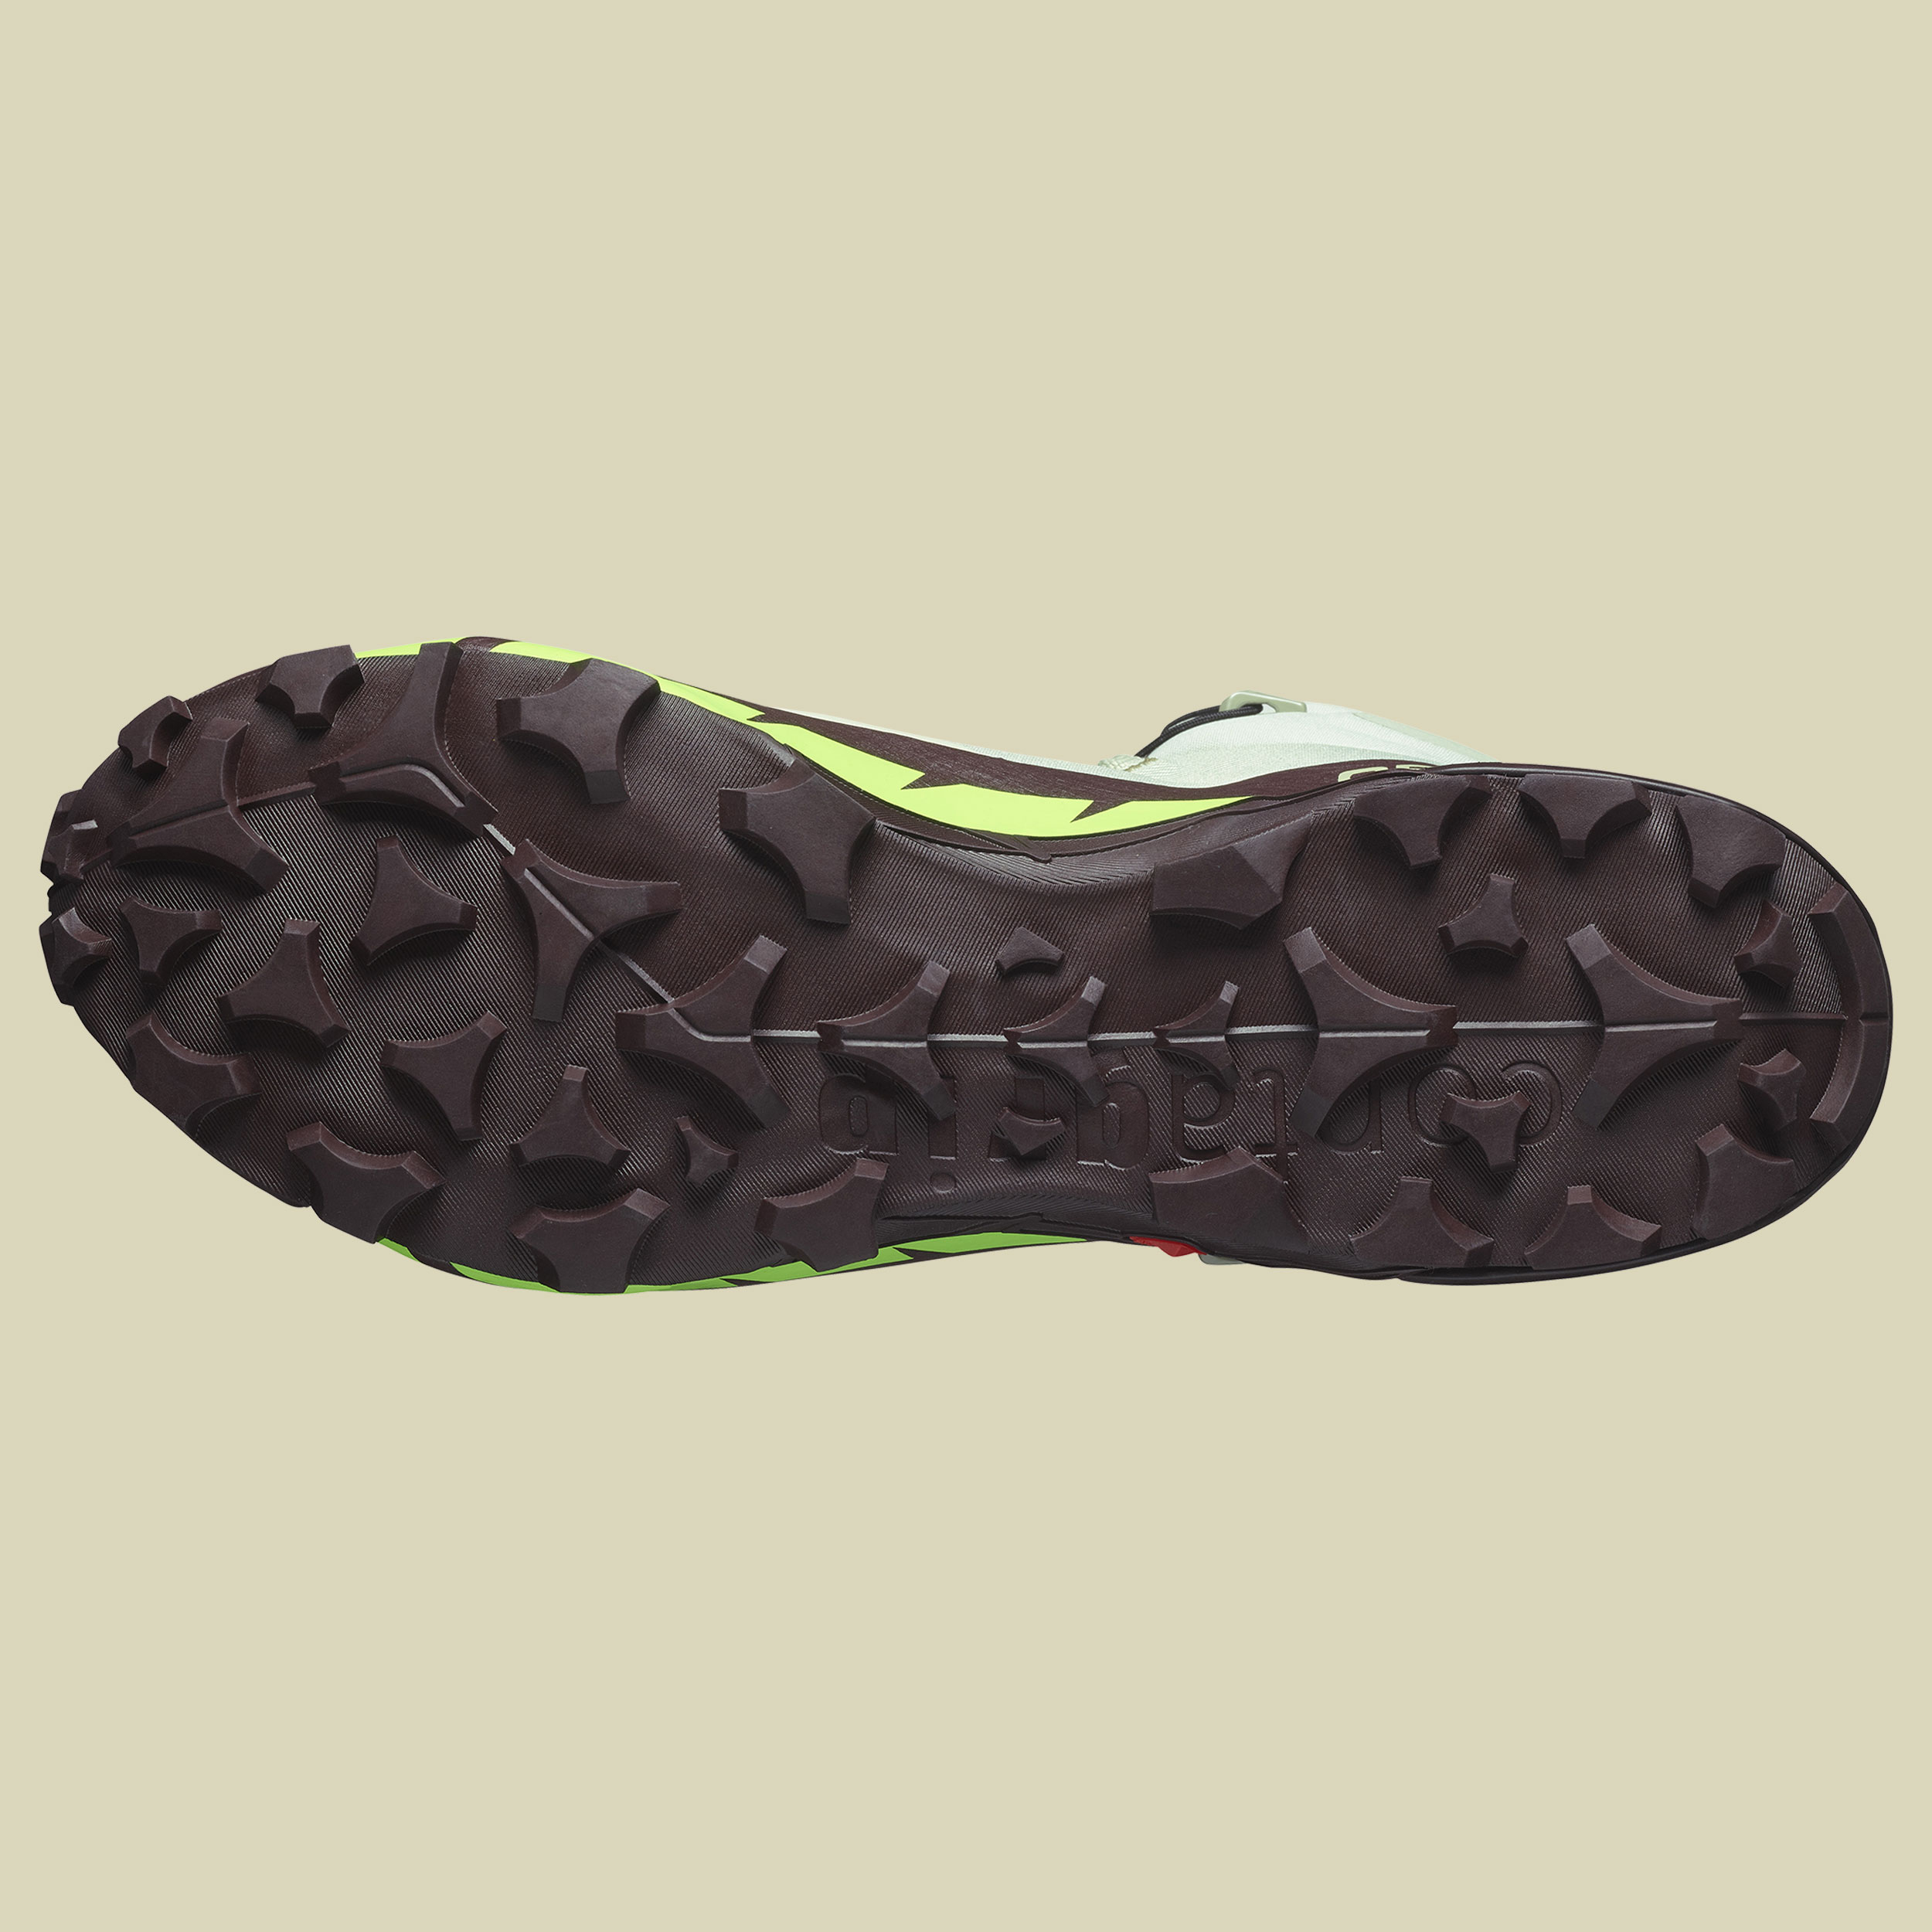 Cross Hike Mid GTX 2 Men Größe UK 12 Farbe desert sage/green gecko/chocolate plum